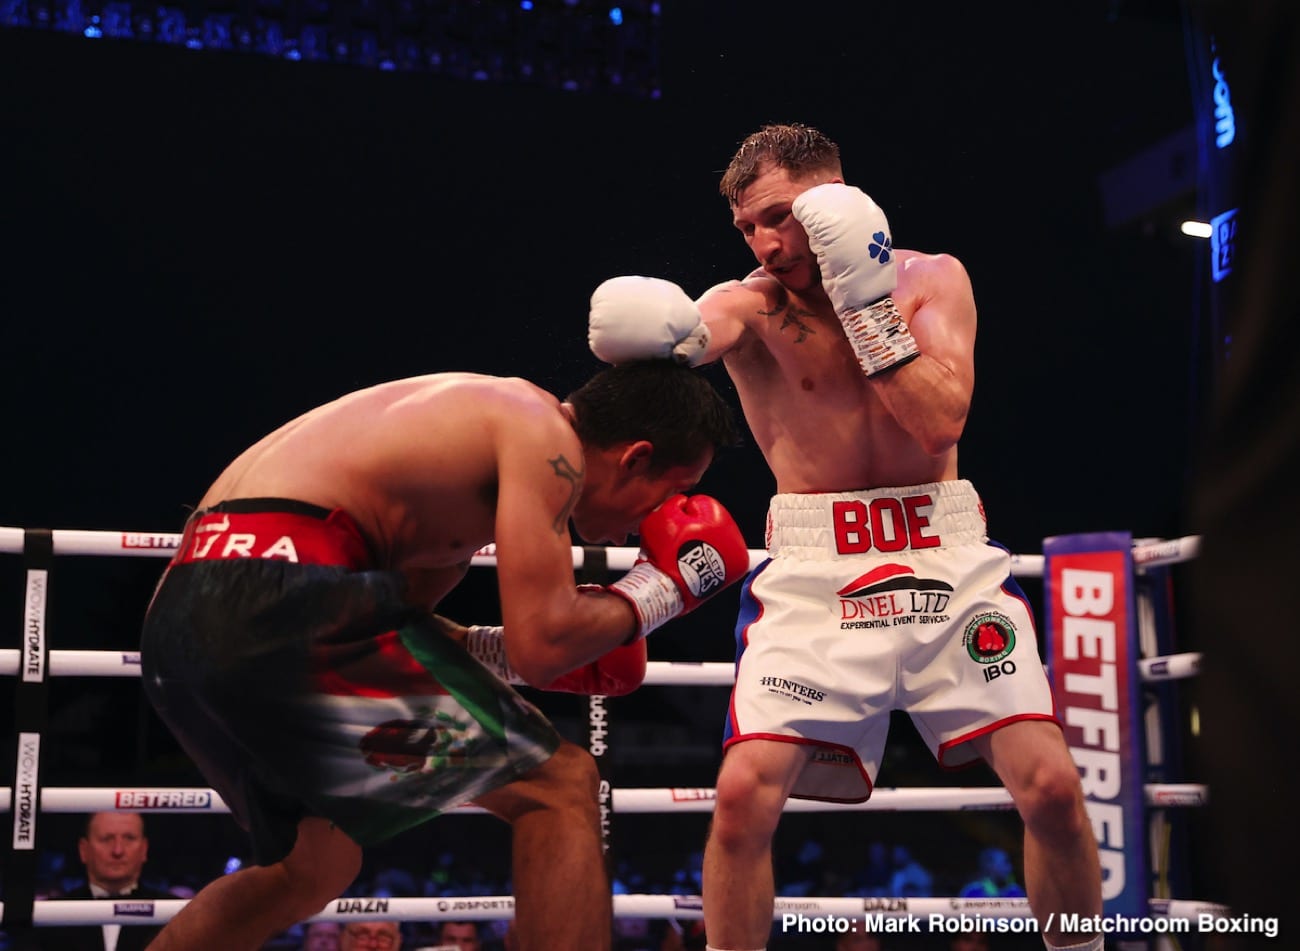 Josh Warrington boxing photo and news image